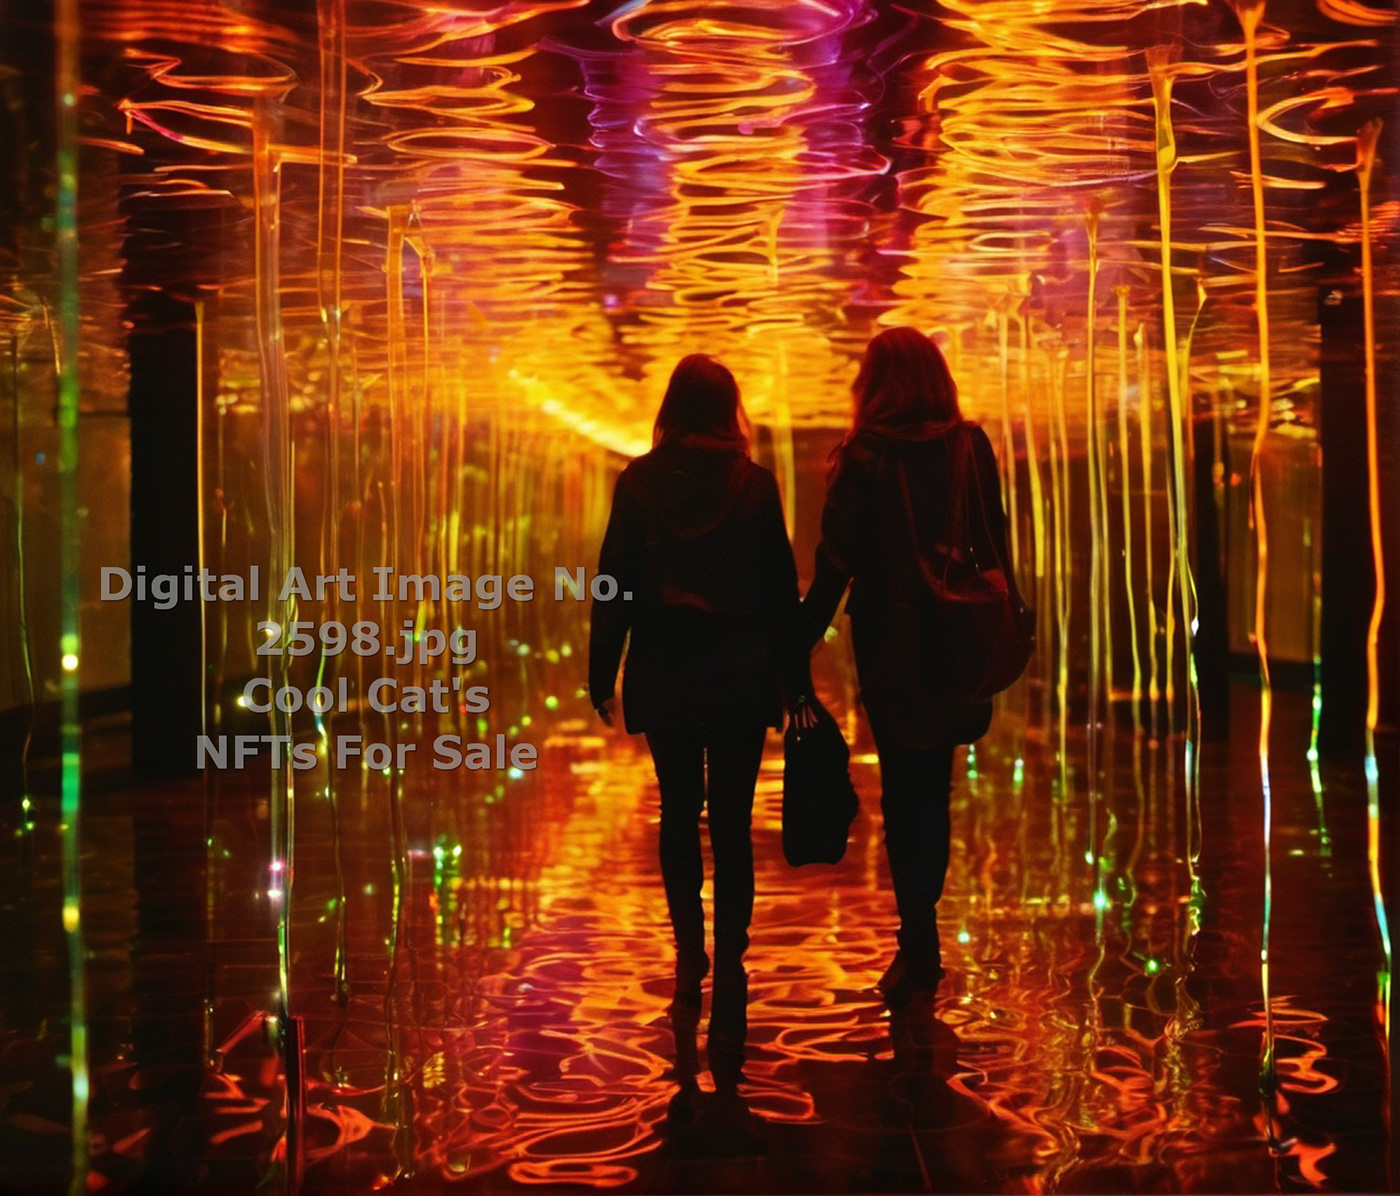 #artworks #artworksforsale #graphicart #DigitalArt #aiartworks #nftforsale #digitalartworks #digitalartist #nftdigitalart #nftartworks